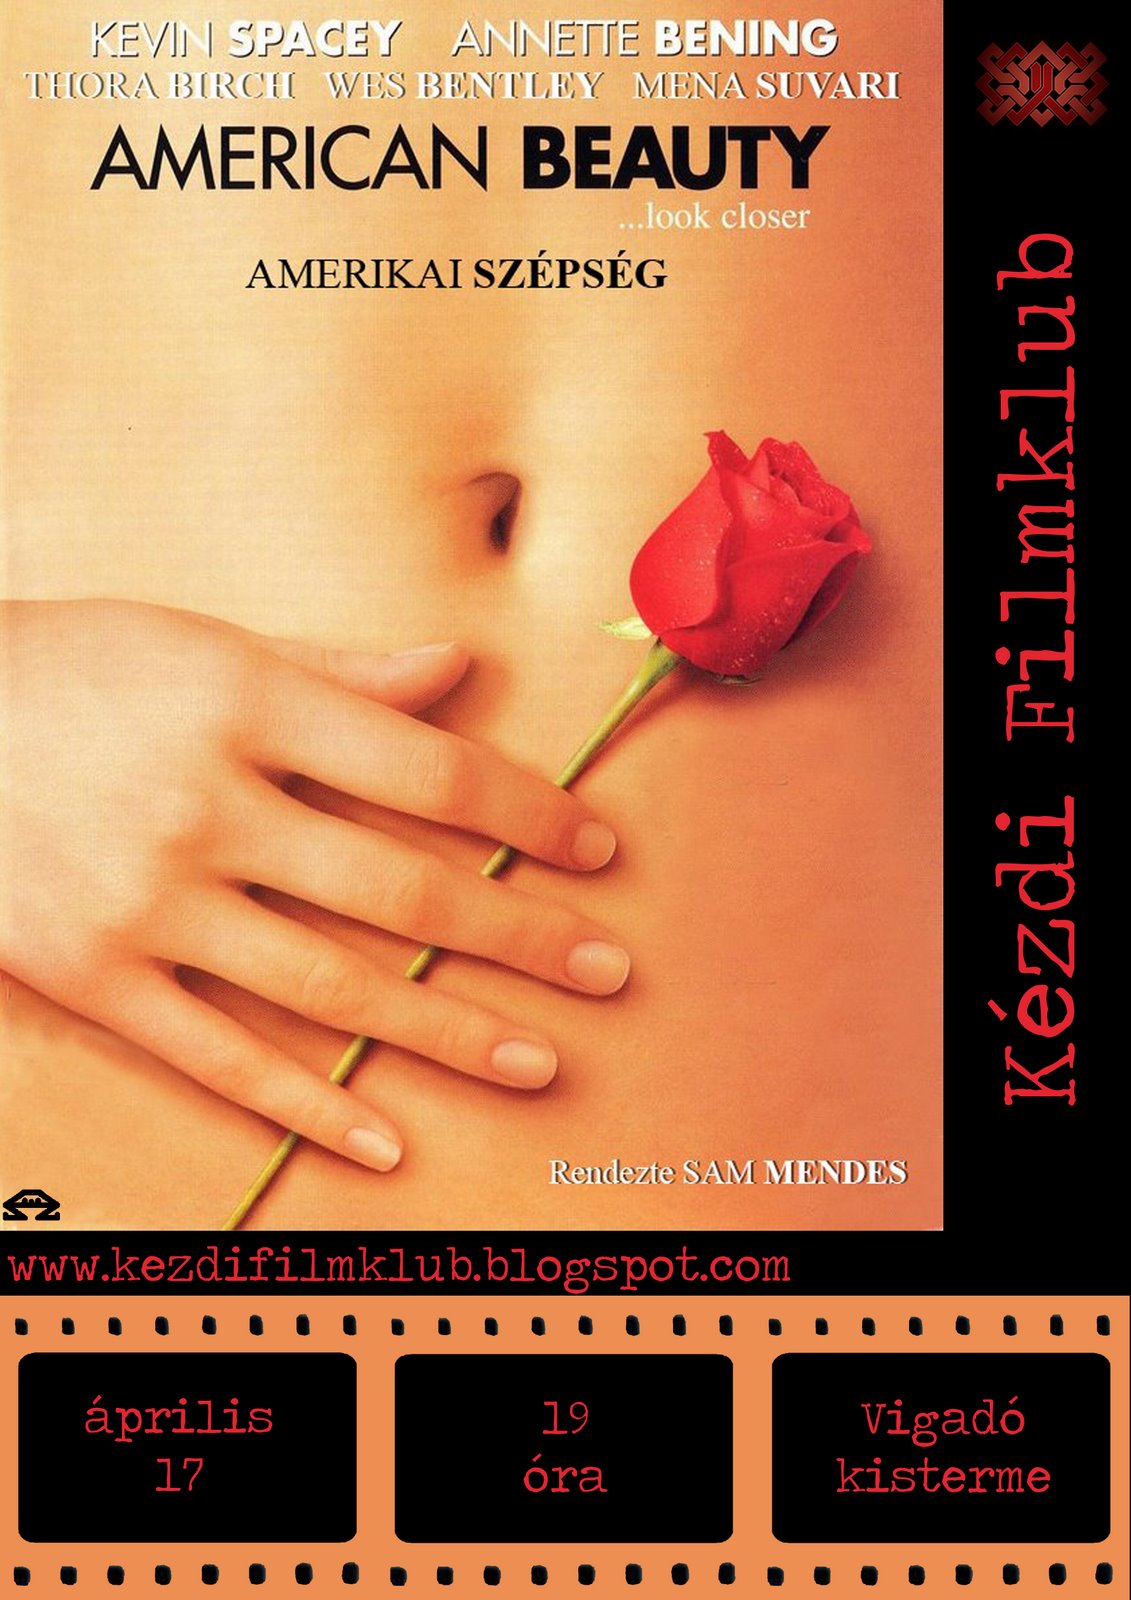 2008.04.17 - American Beauty (Amerikai Szpsg) - Filmklub